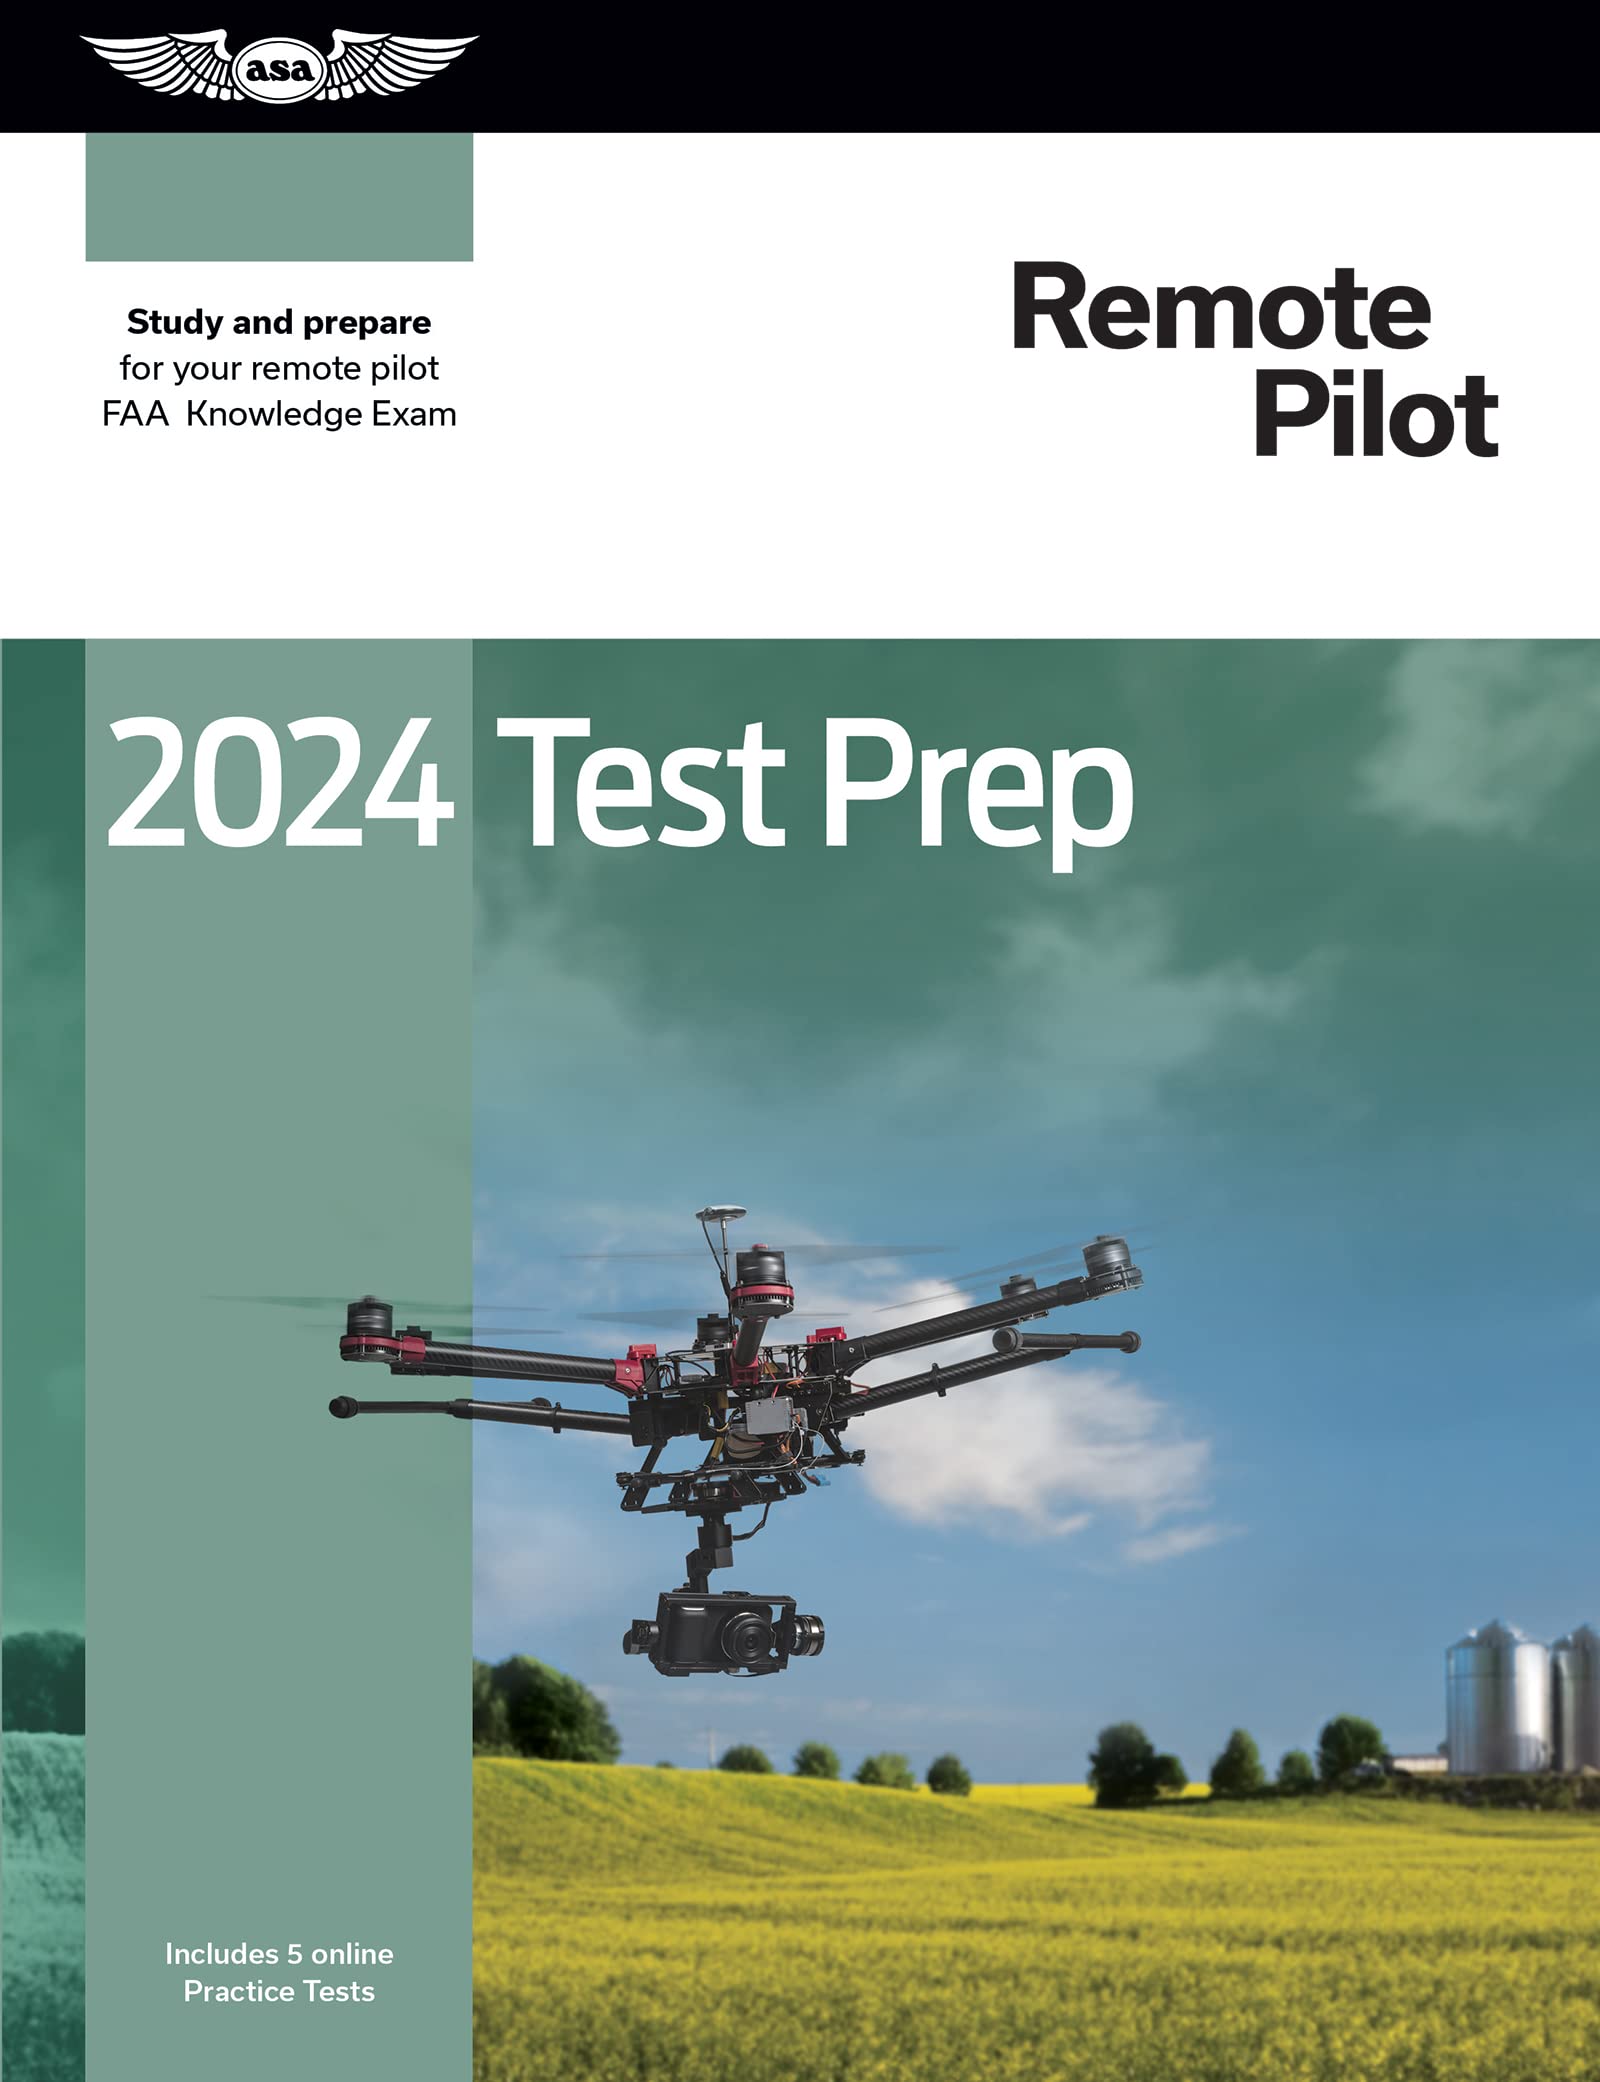 2024 Remote Pilot Test Prep: Study and Prepare for Your Remote Pilot FAA Knowledge Exam by ASA Test Prep Board